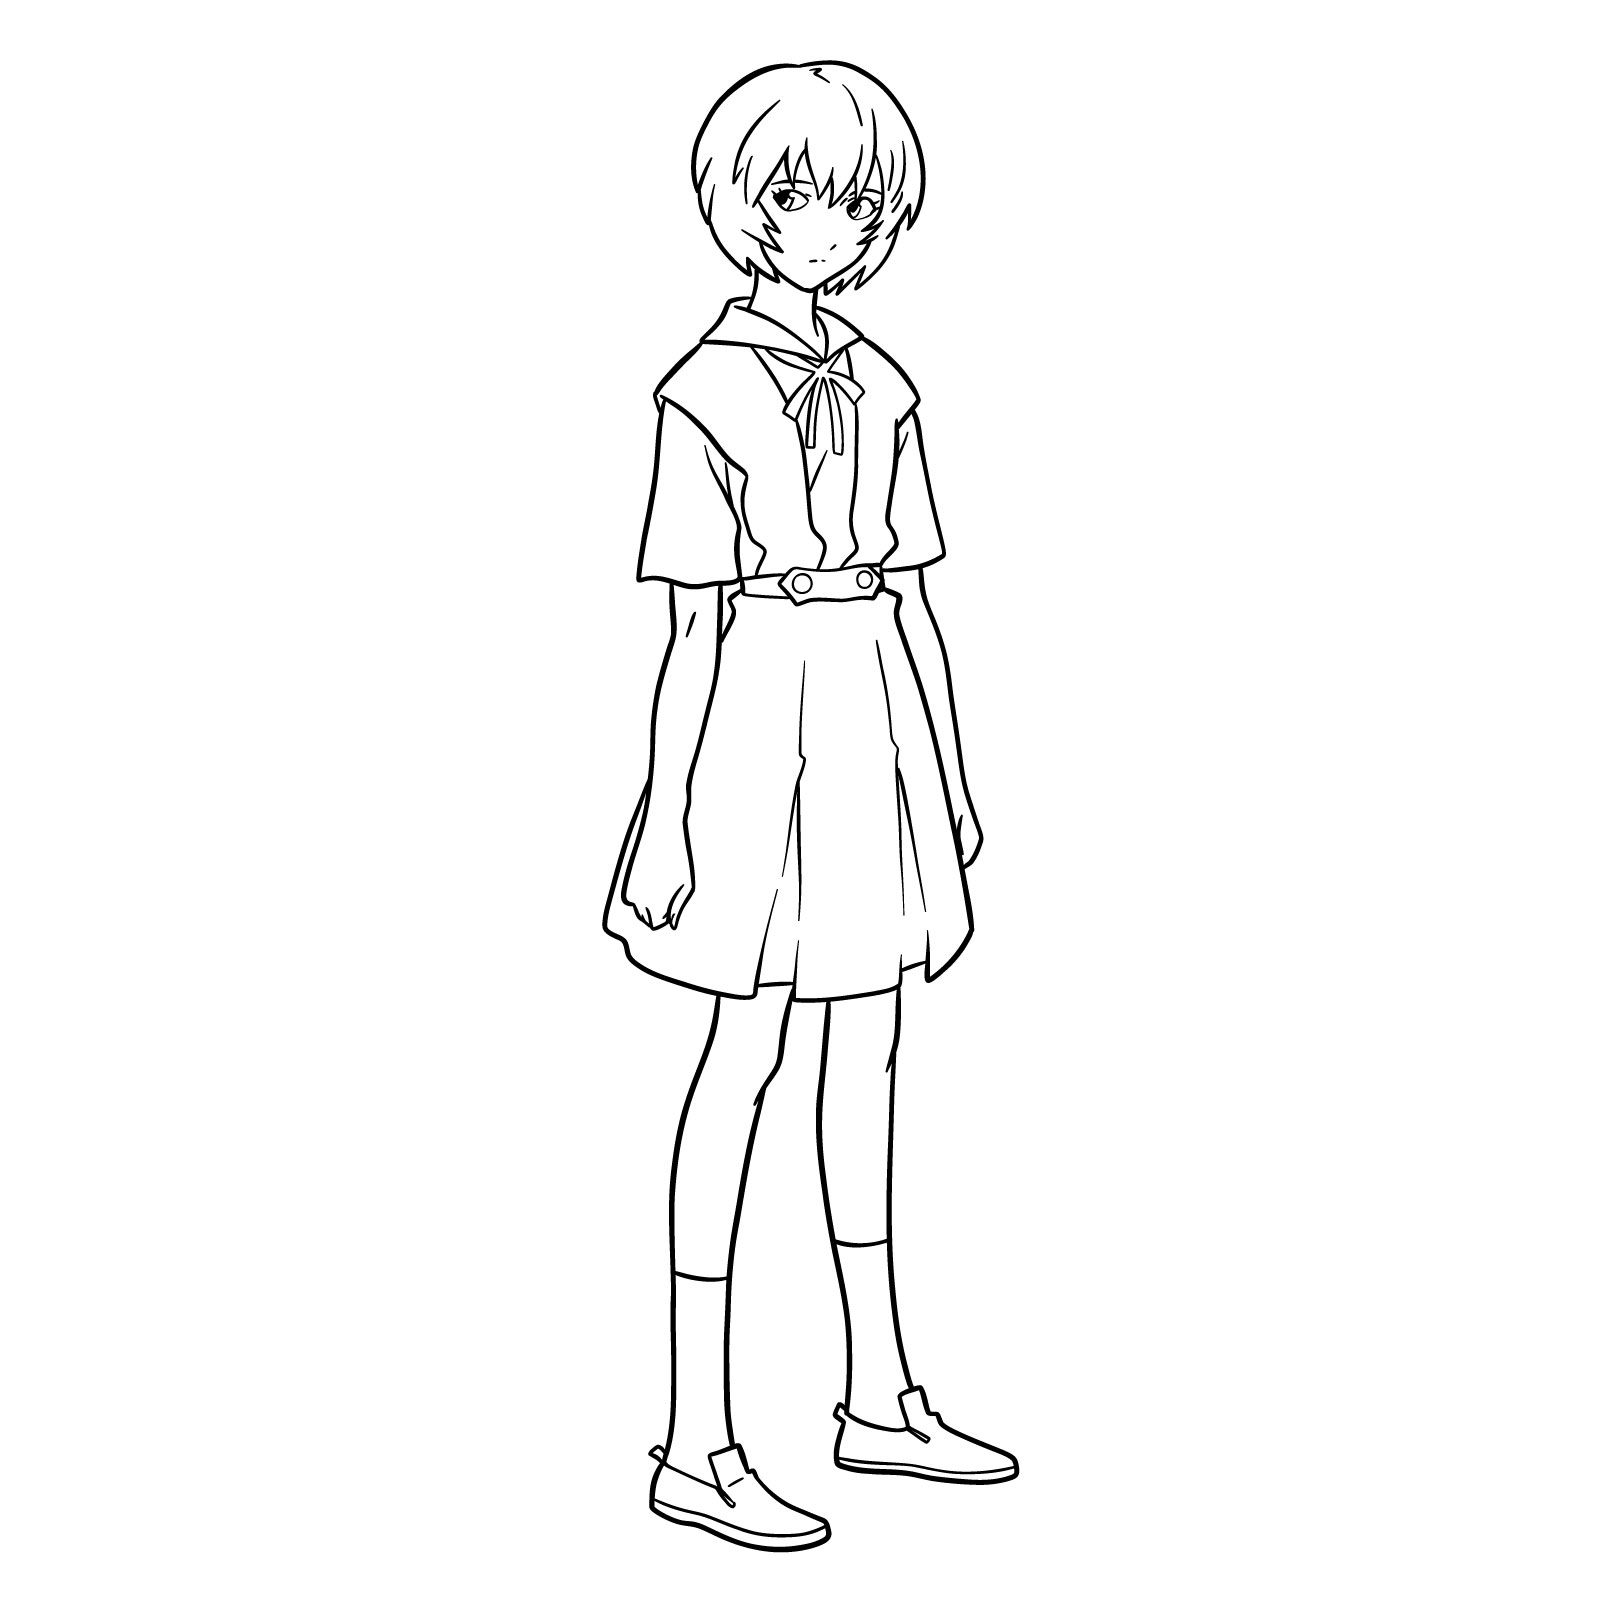 How to draw Rei Ayanami in her school uniform (rebuild) - final step